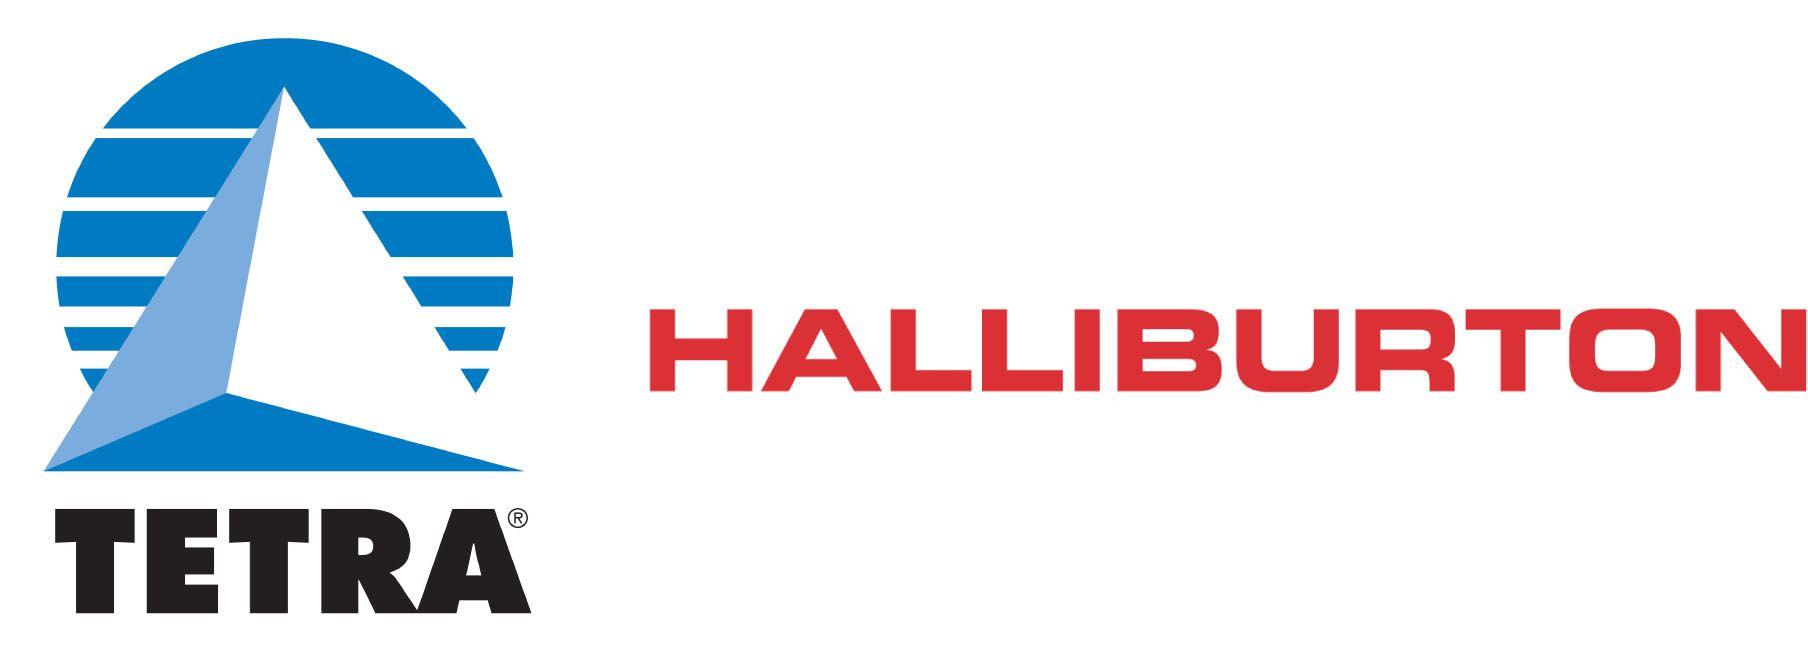 Haliburton Logo - TETRA Technologies, Inc. and Halliburton Sign Global Marketing and ...